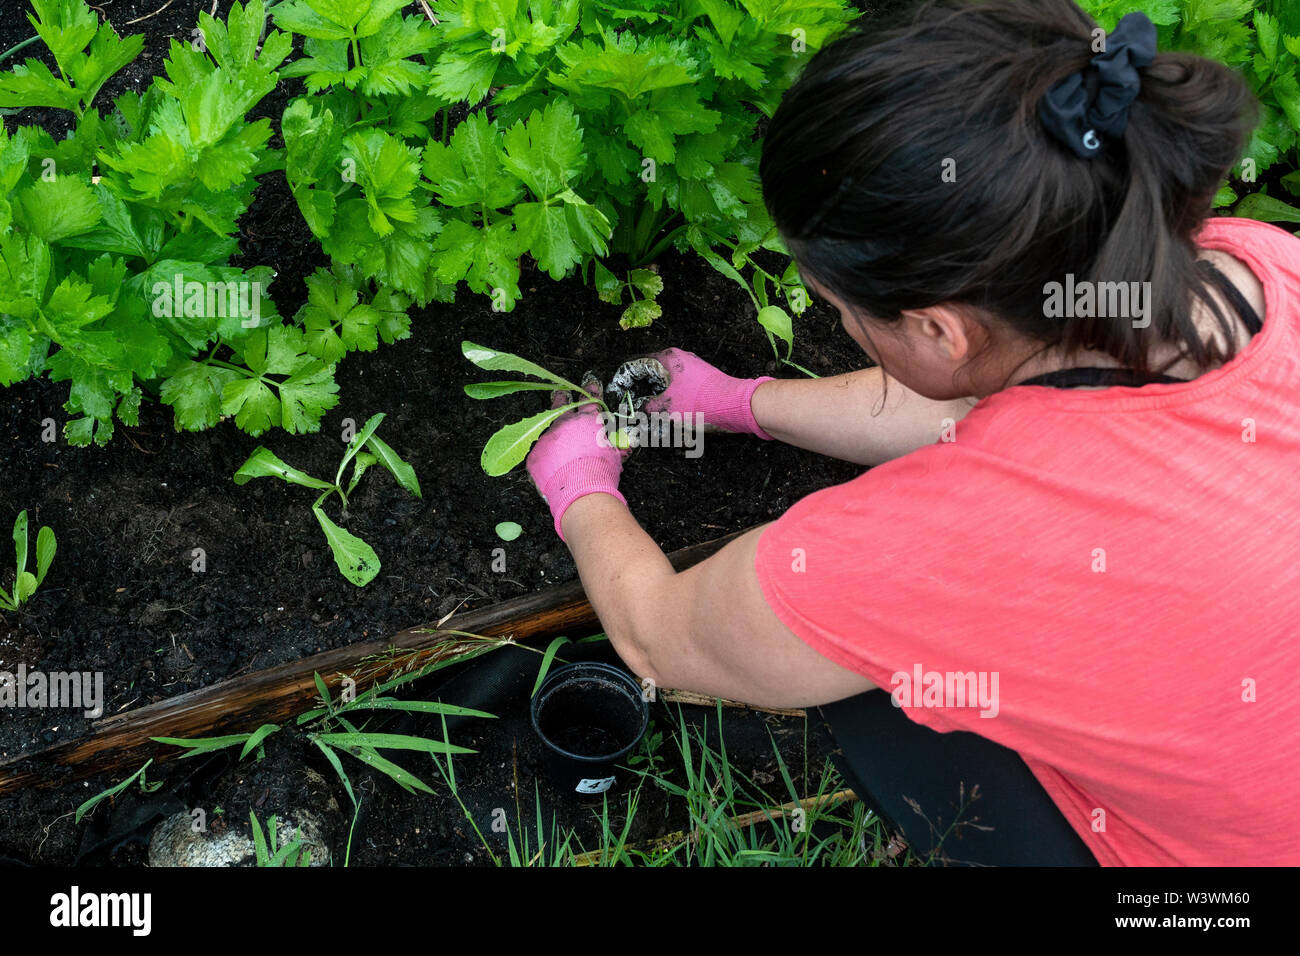 Rear view of a women working in her backyard vegetable garden. Stock Photo